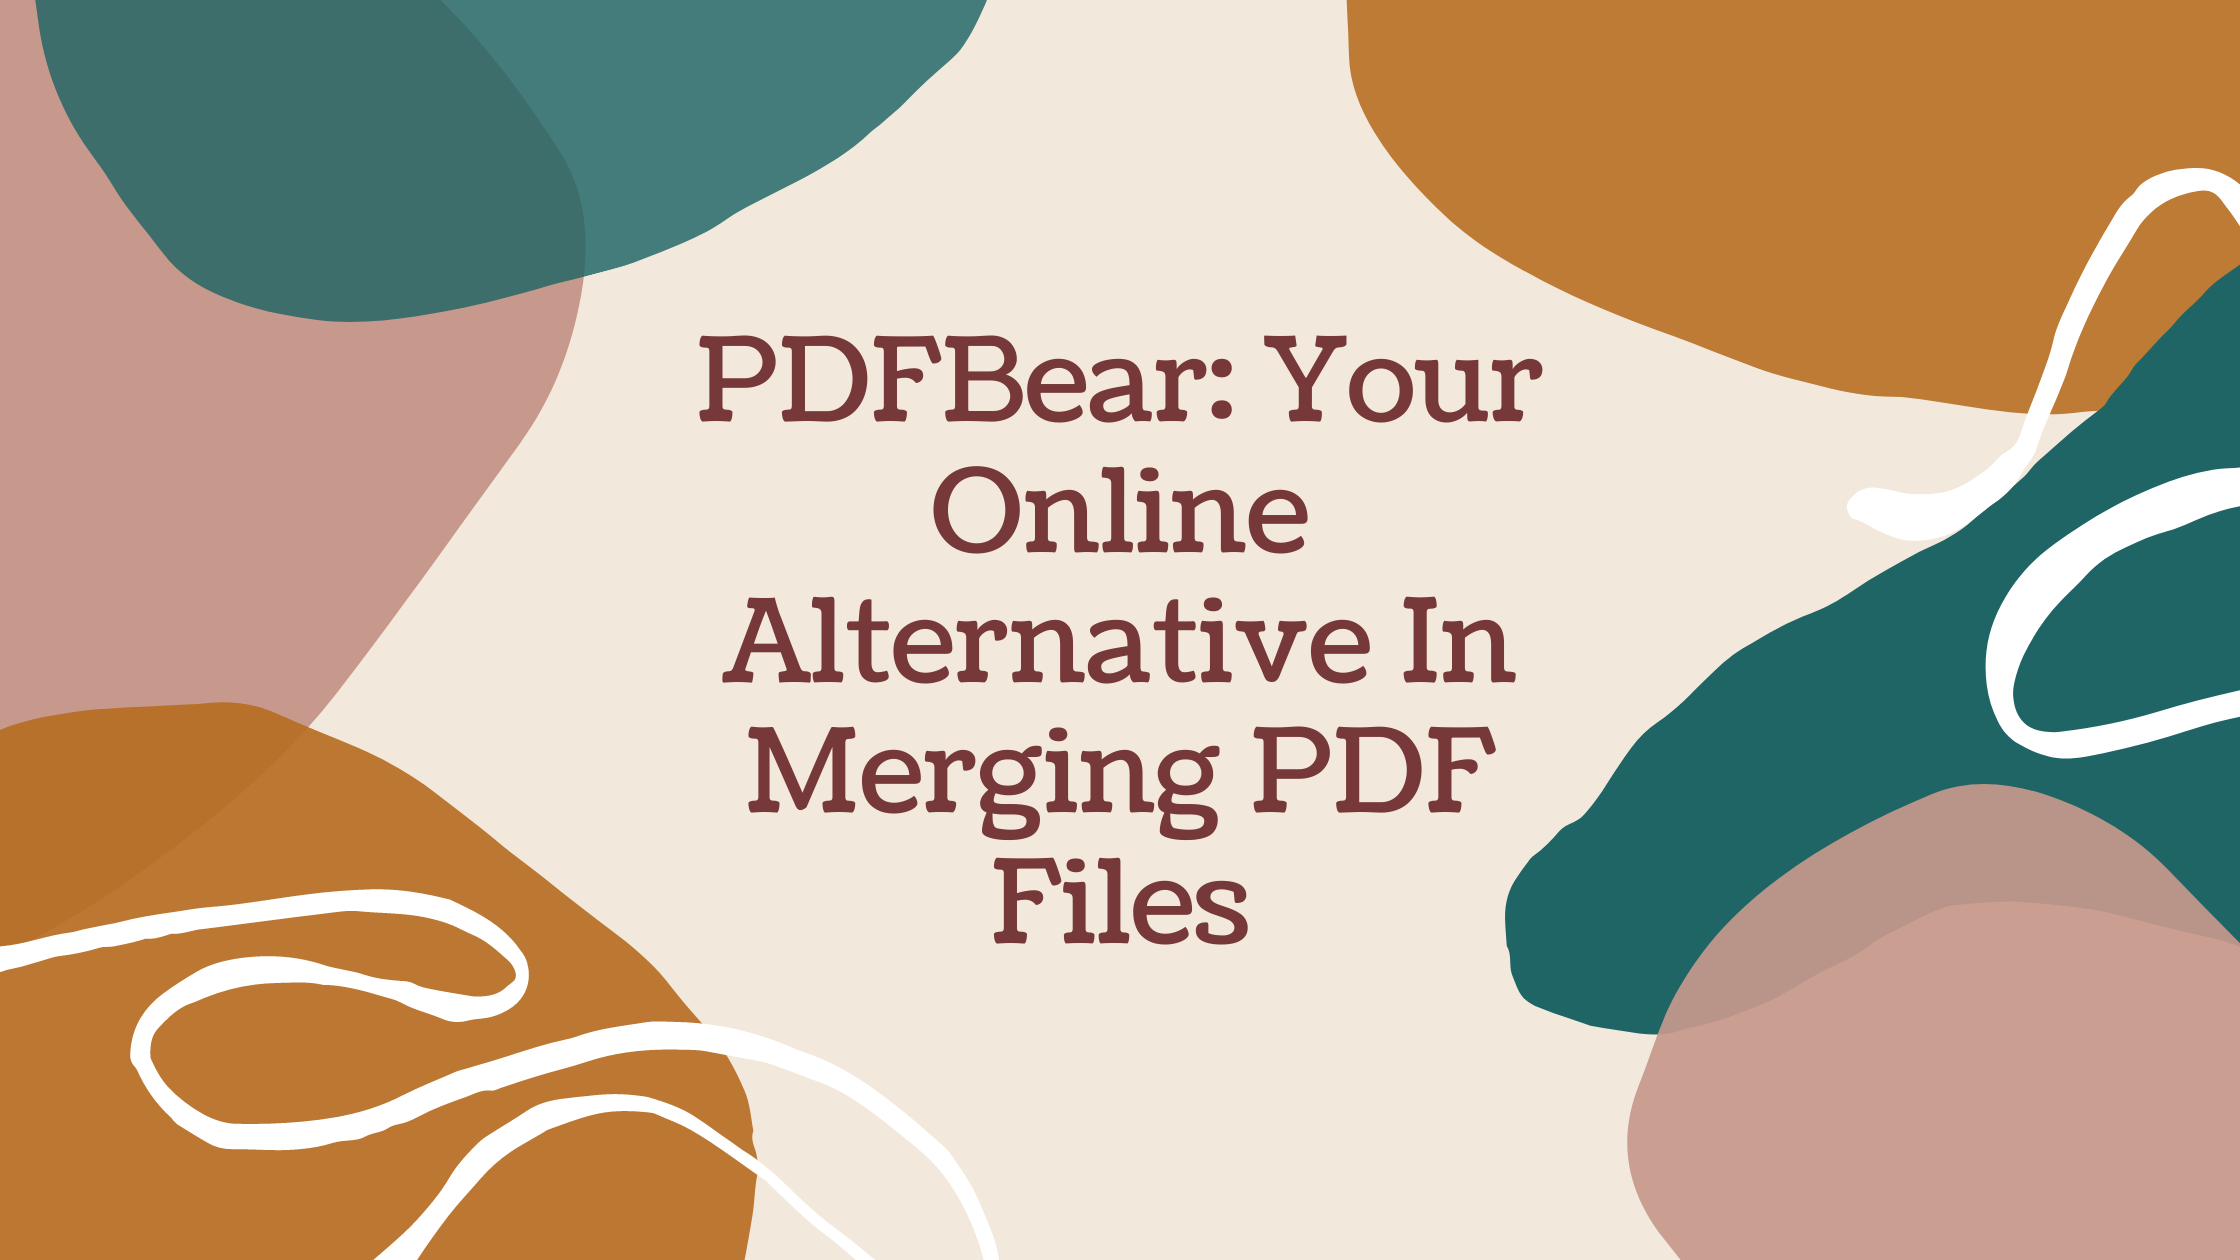 PDFBear: Your Online Alternative In Merging PDF Files